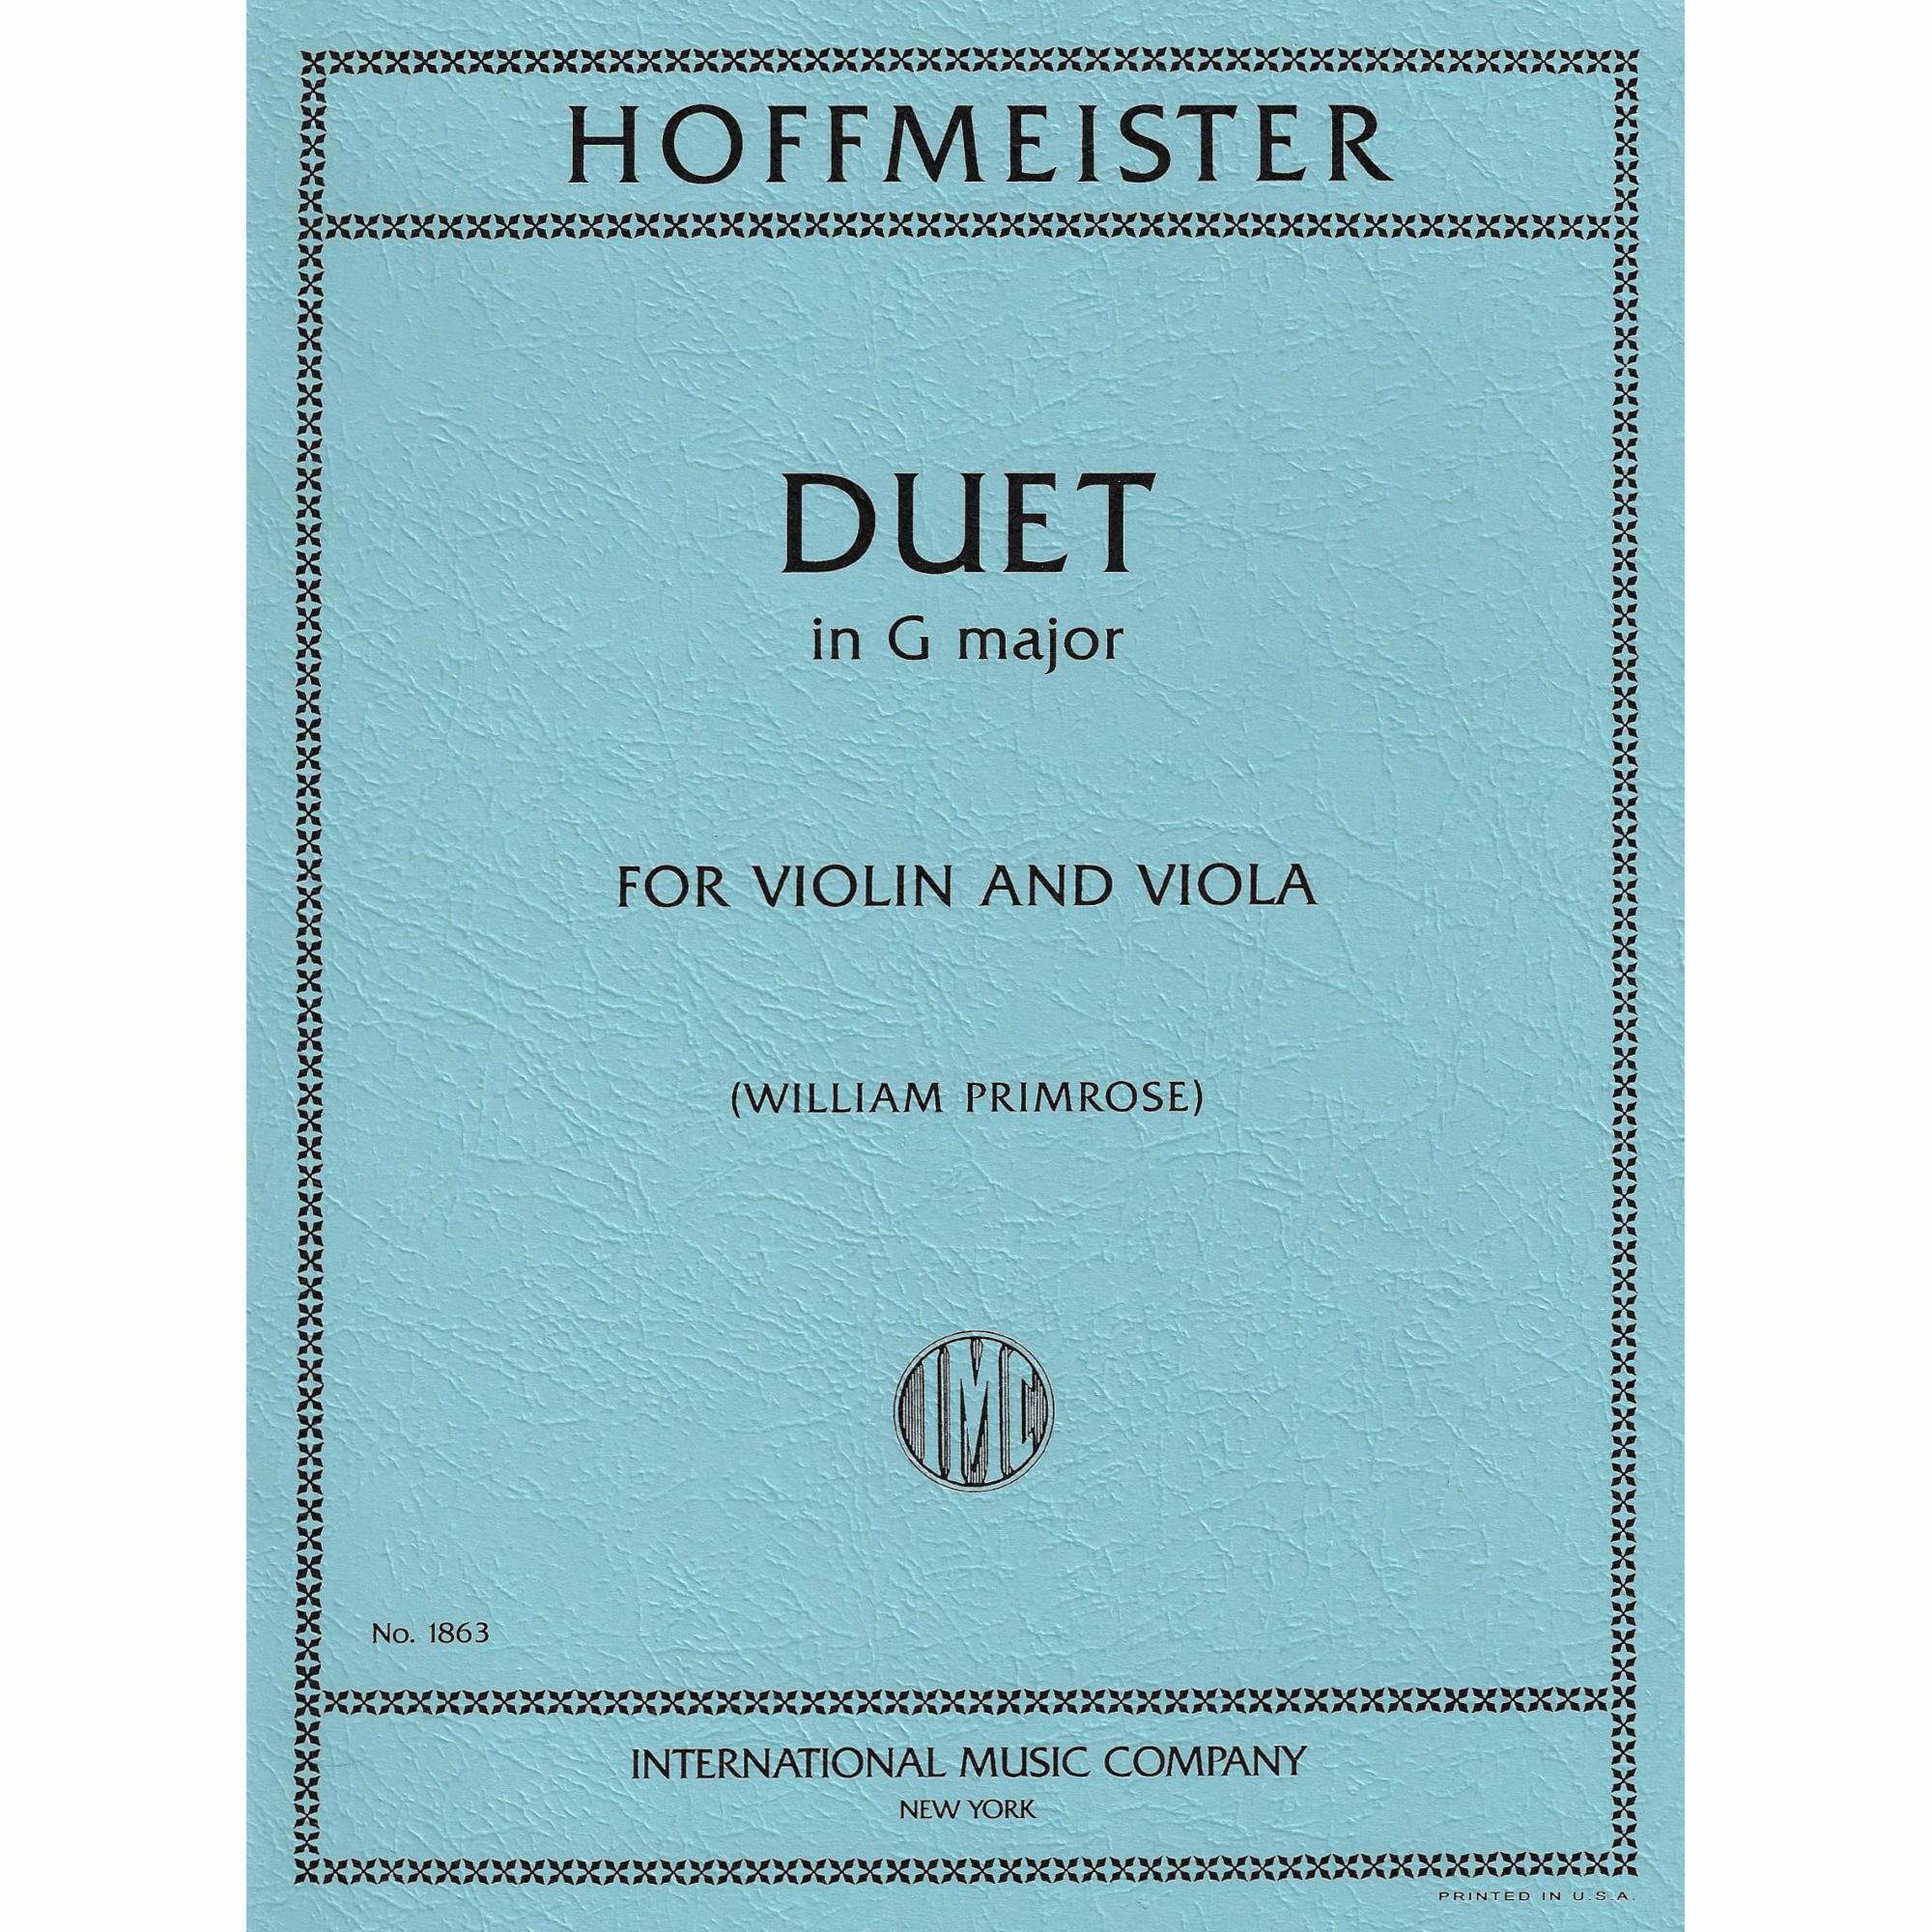 Hoffmeister -- Duet in G Major for Violin and Viola